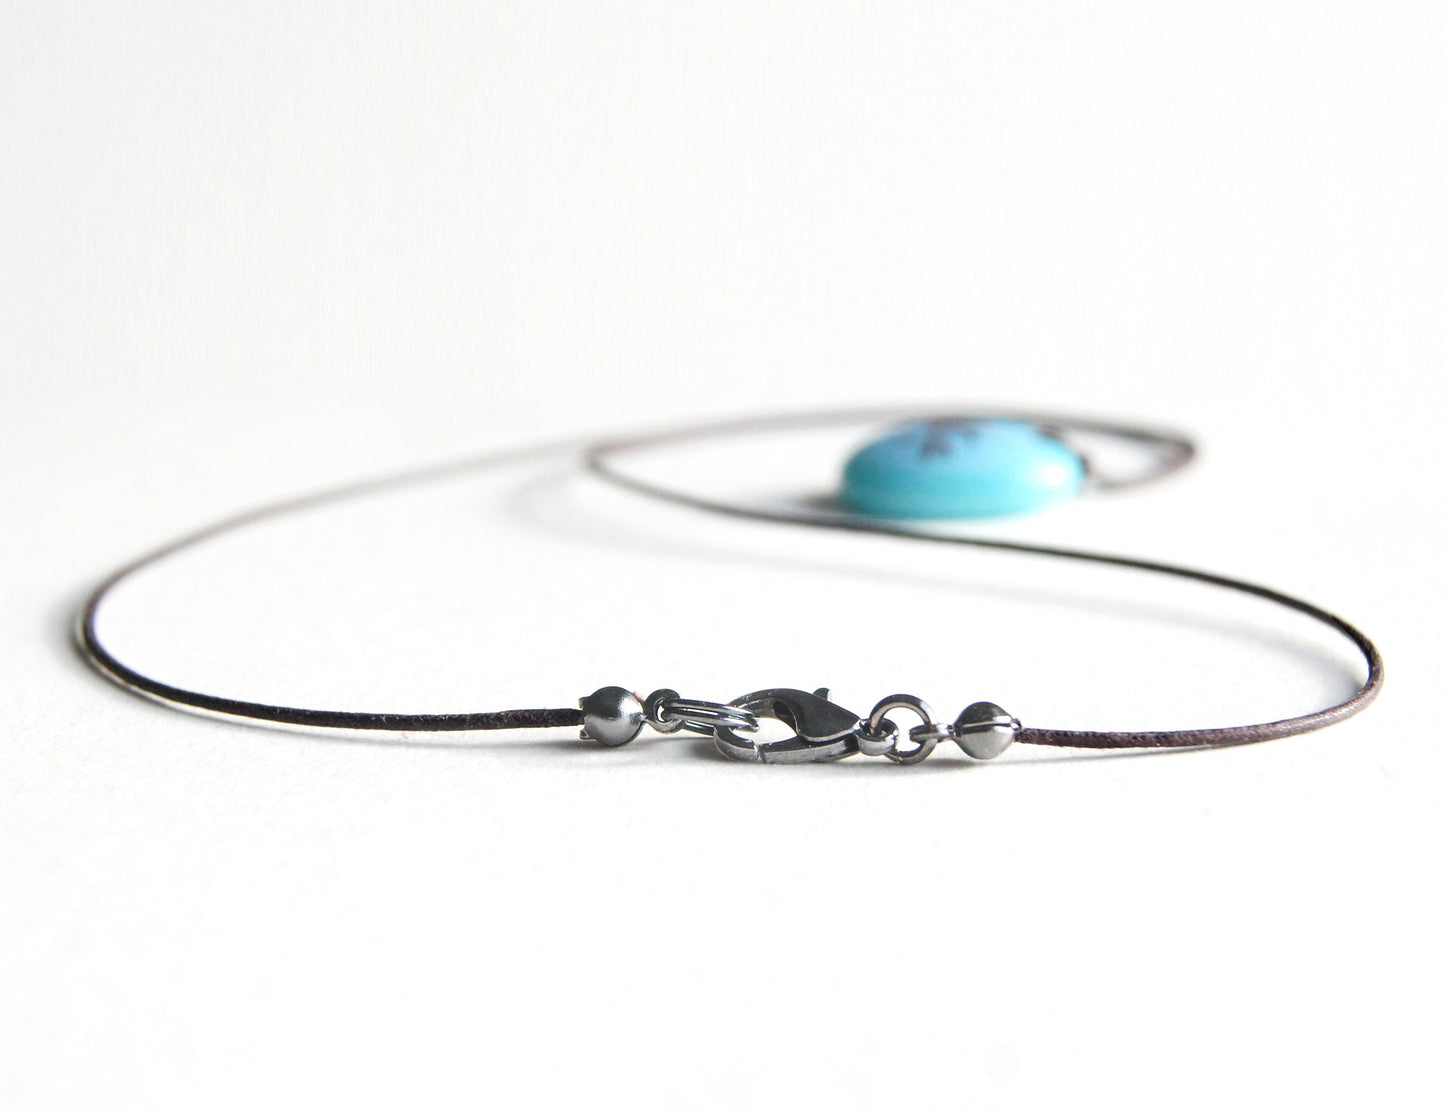 Glass Pendant Necklace #15